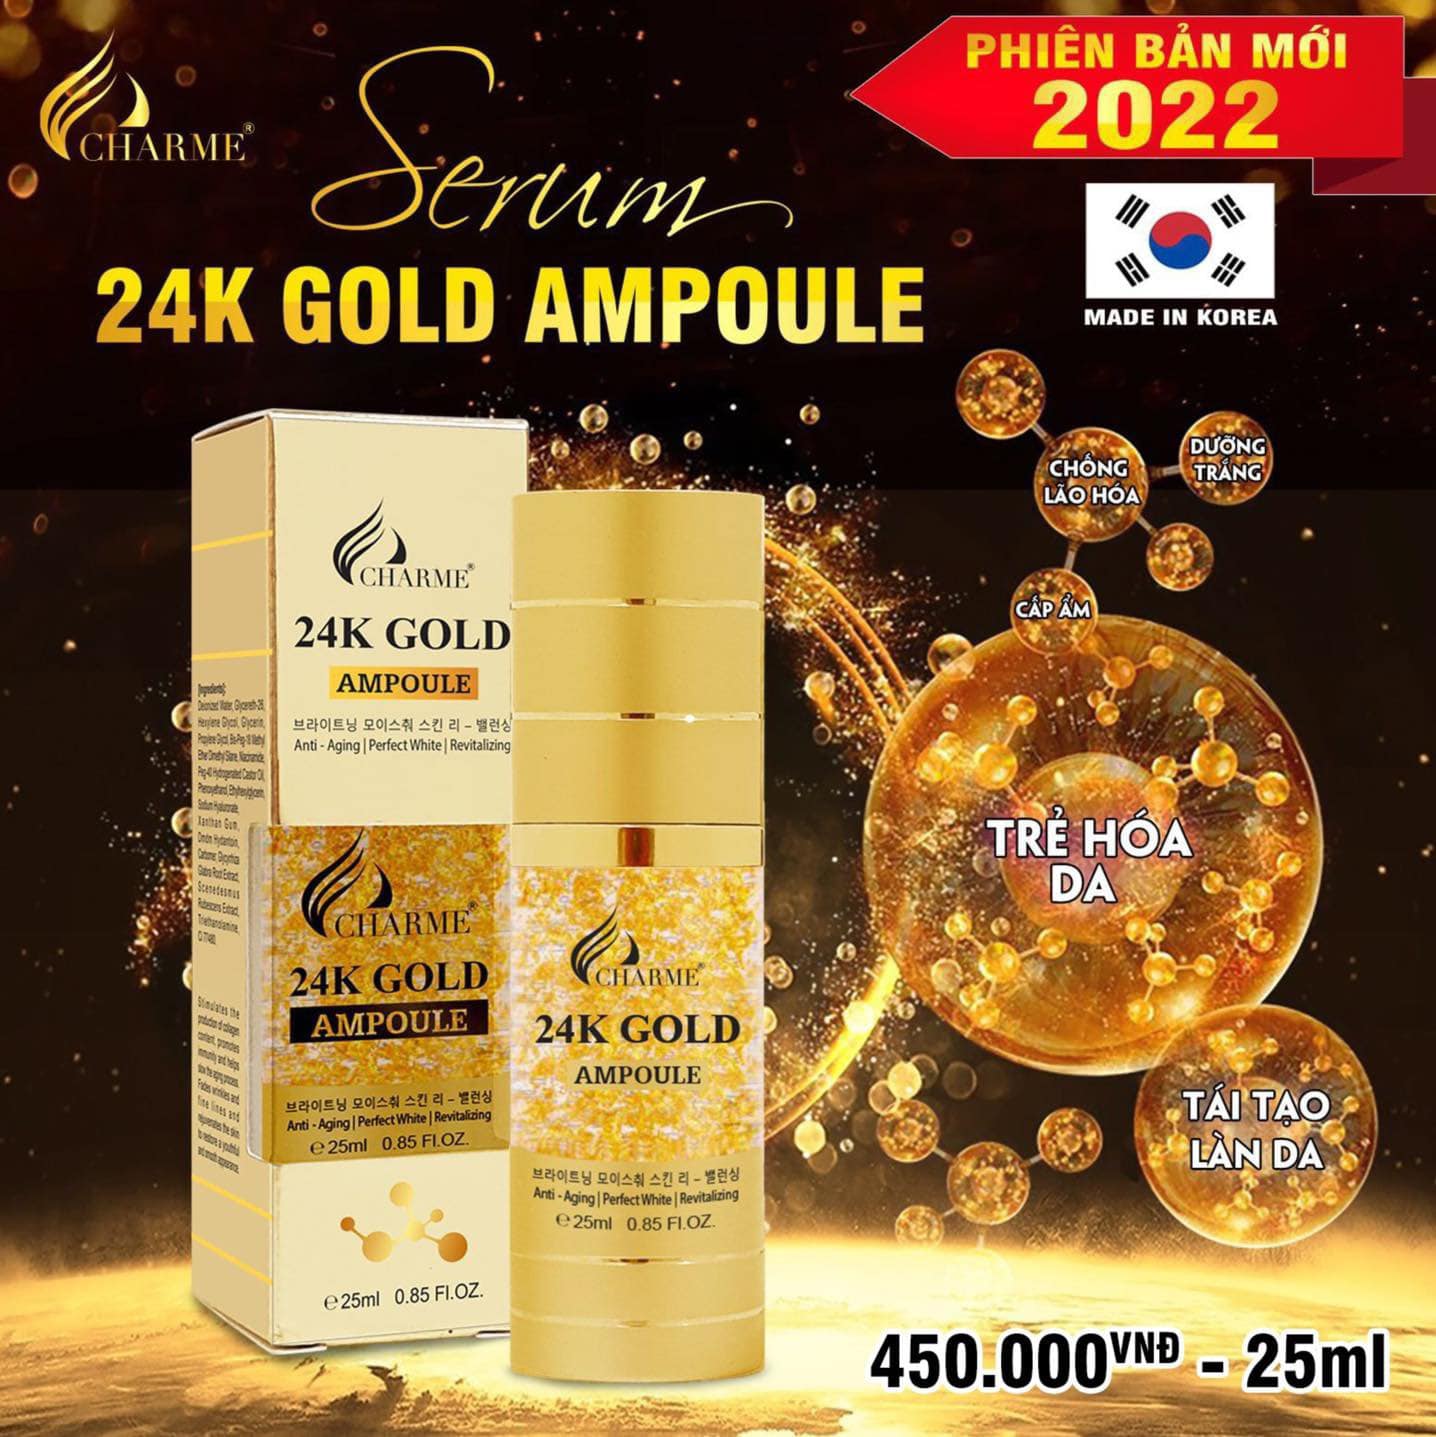 Serum Vàng 24k Charm Gold Ampoule